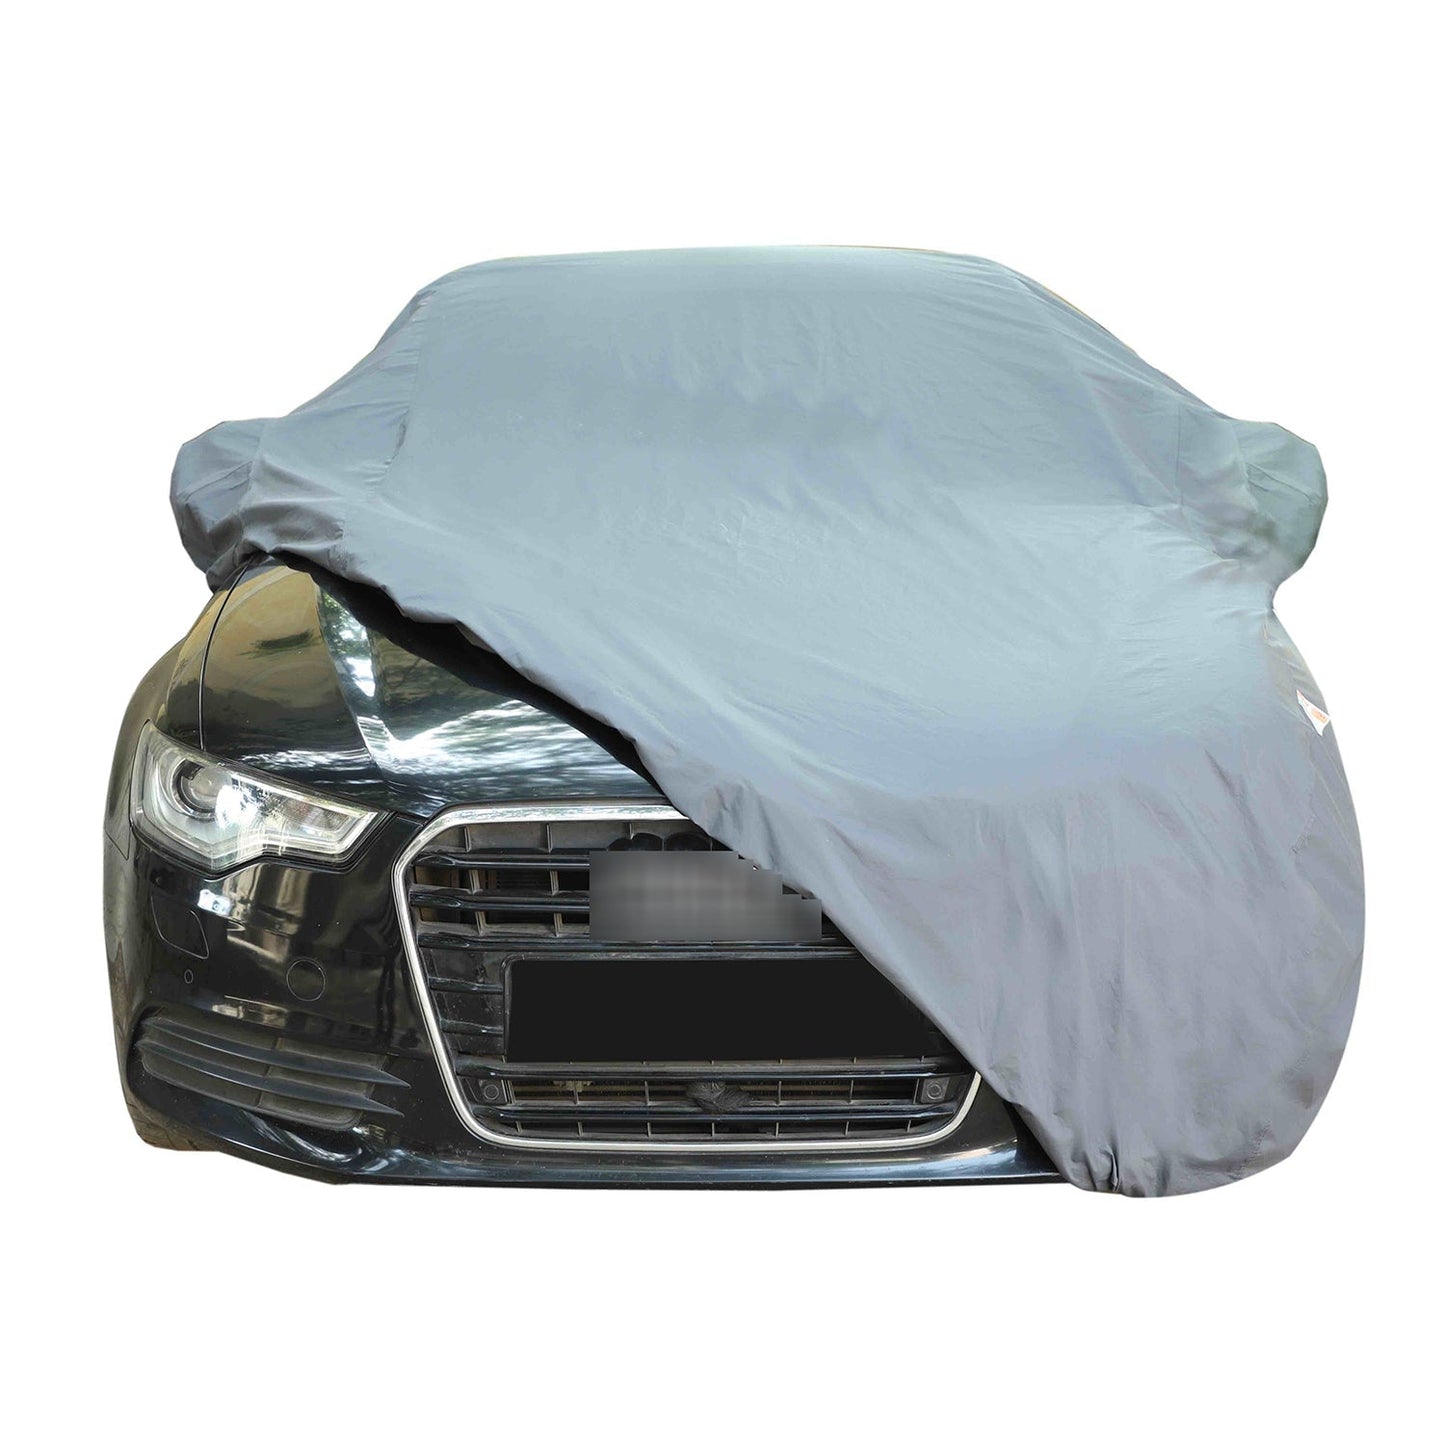 Oshotto Dark Grey 100% Anti Reflective, dustproof and Water Proof Car Body Cover with Mirror Pockets For Maruti Suzuki Brezza